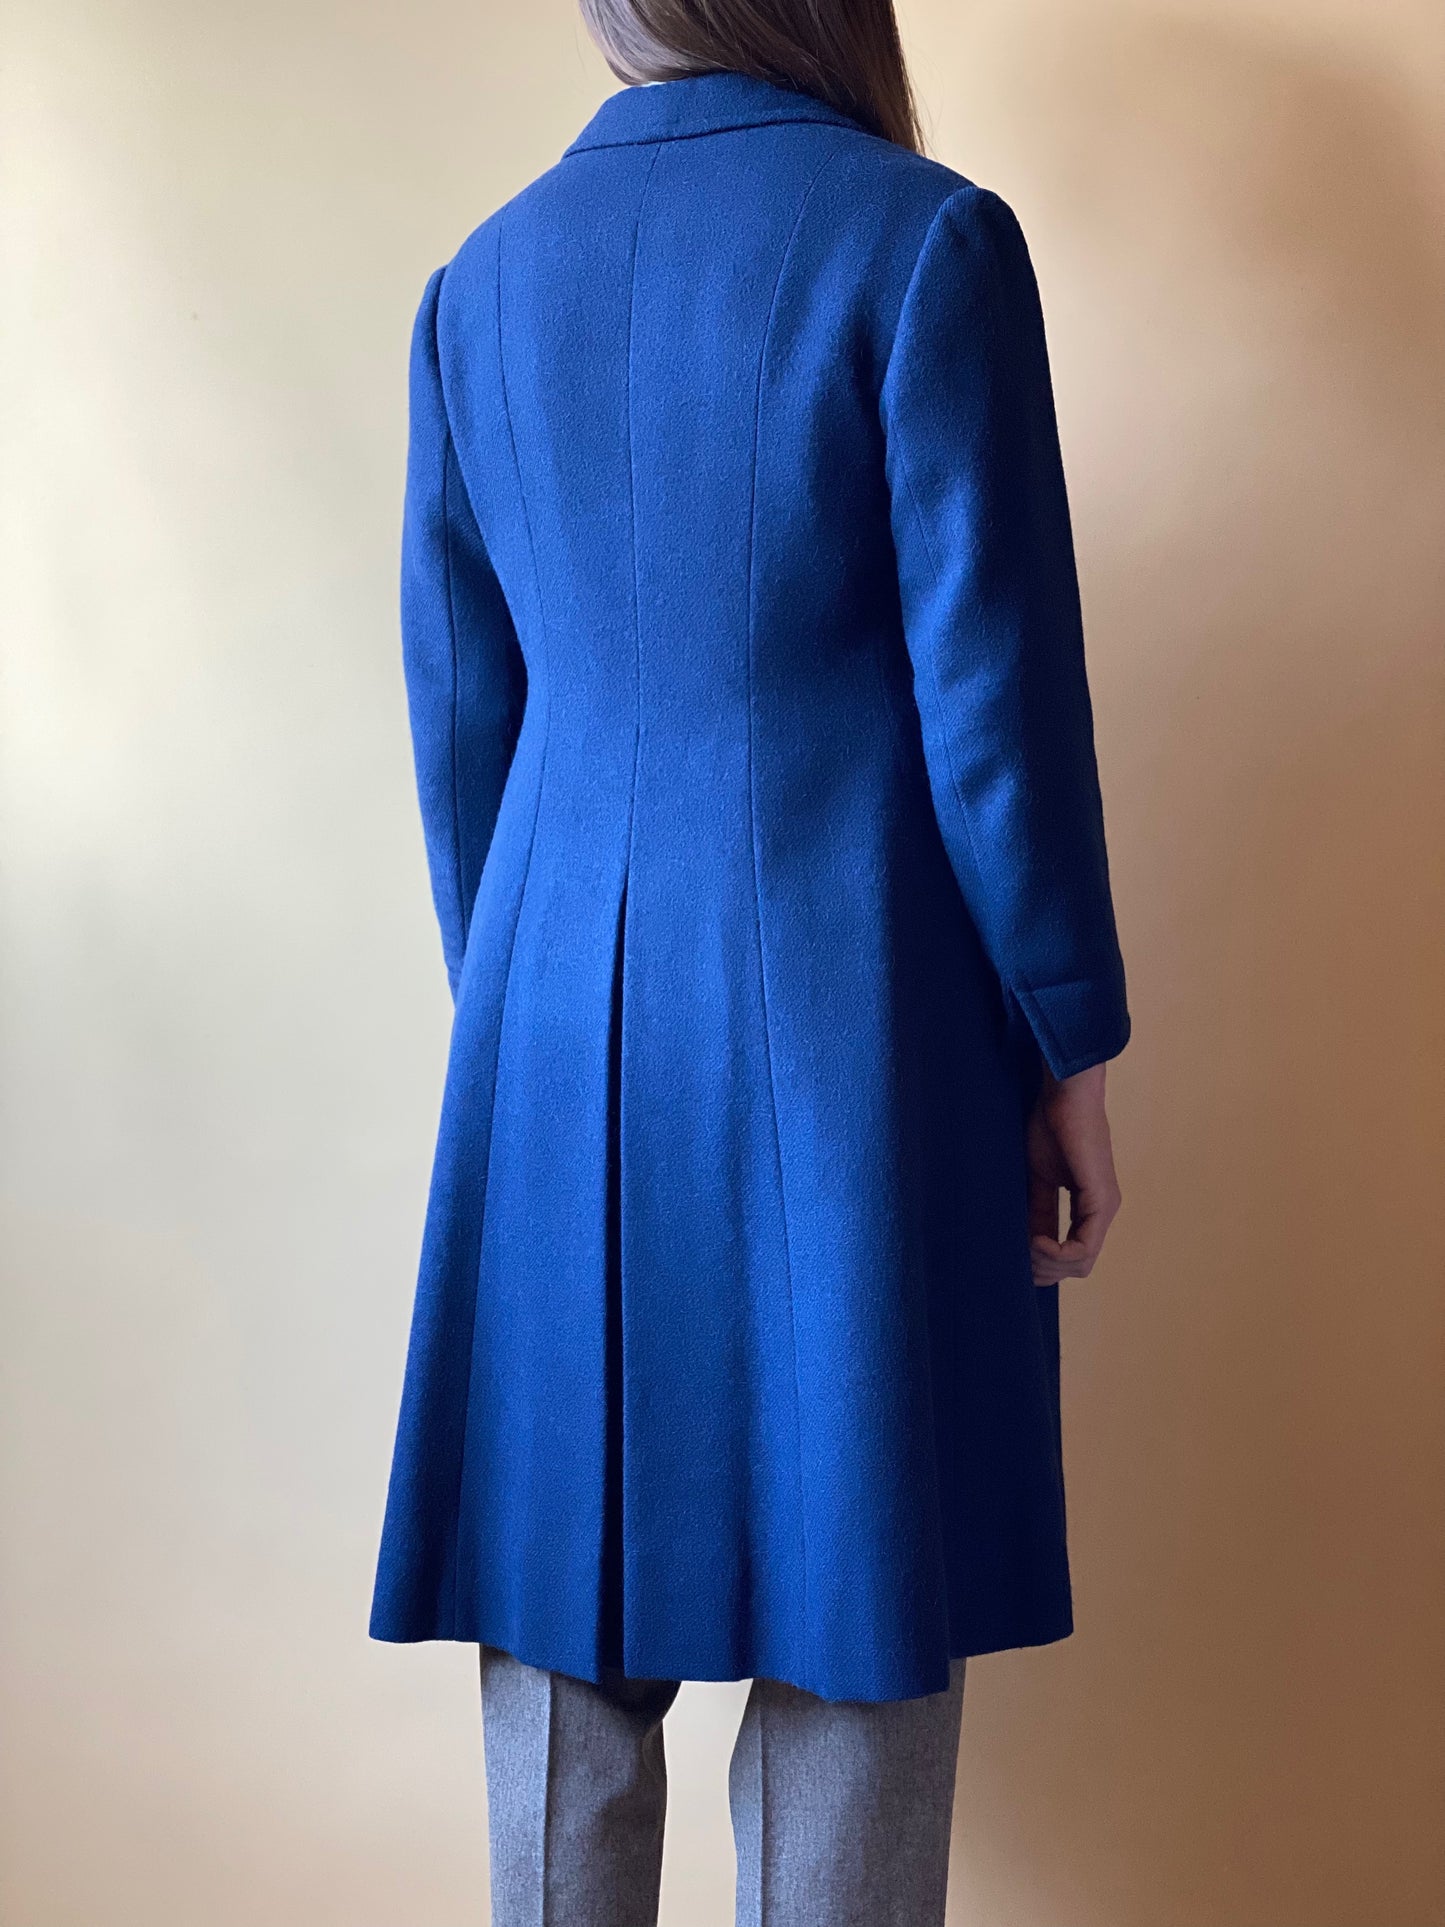 Vintage Tailored Blue Coat